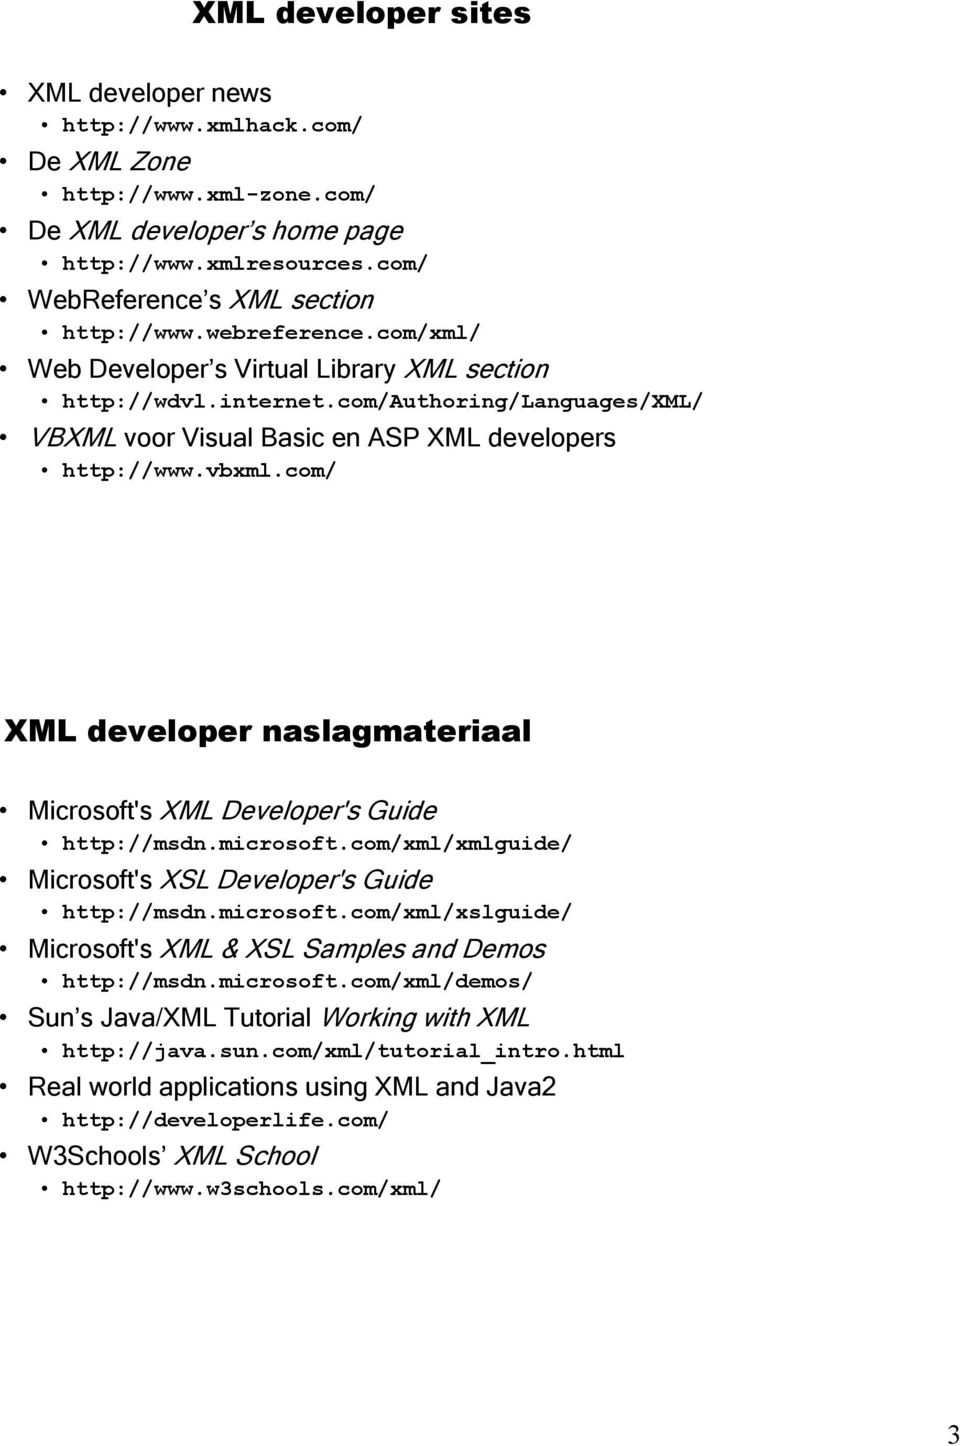 com/ XML developer naslagmateriaal Microsoft's XML Developer's Guide http://msdn.microsoft.com/xml/xmlguide/ Microsoft's XSL Developer's Guide http://msdn.microsoft.com/xml/xslguide/ Microsoft's XML & XSL Samples and Demos http://msdn.